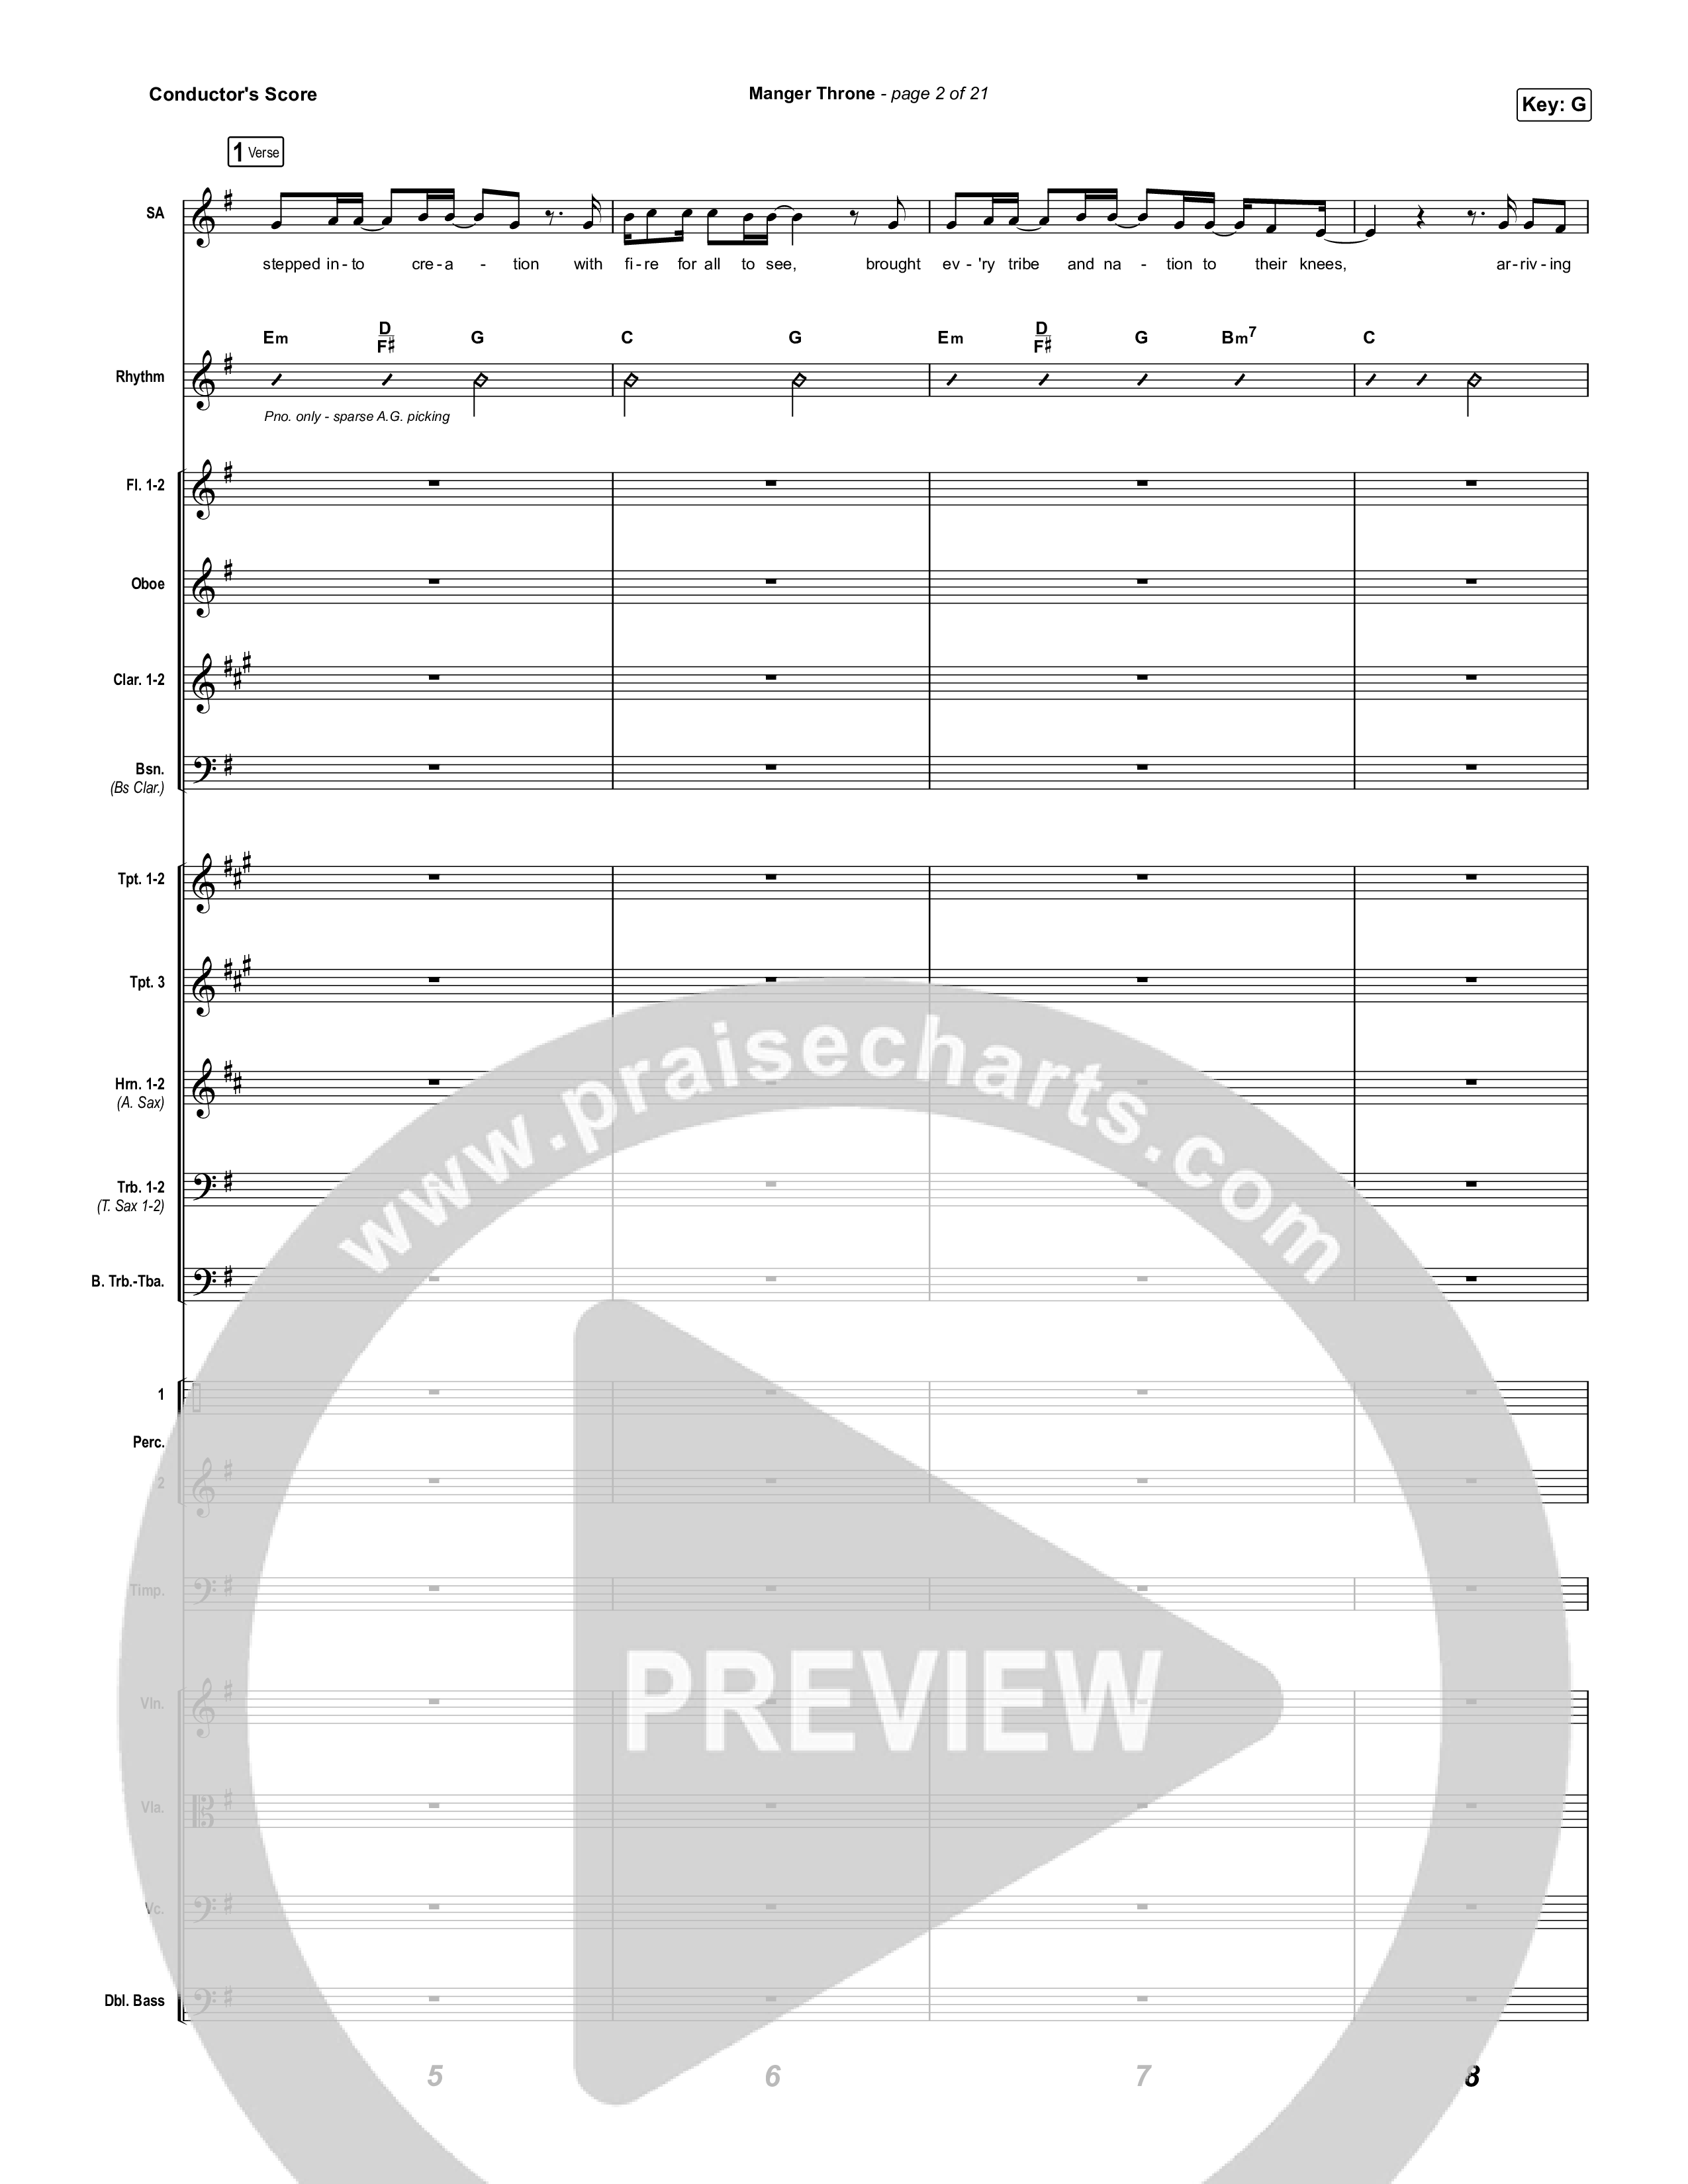 Manger Throne Conductor's Score (Phil Wickham)